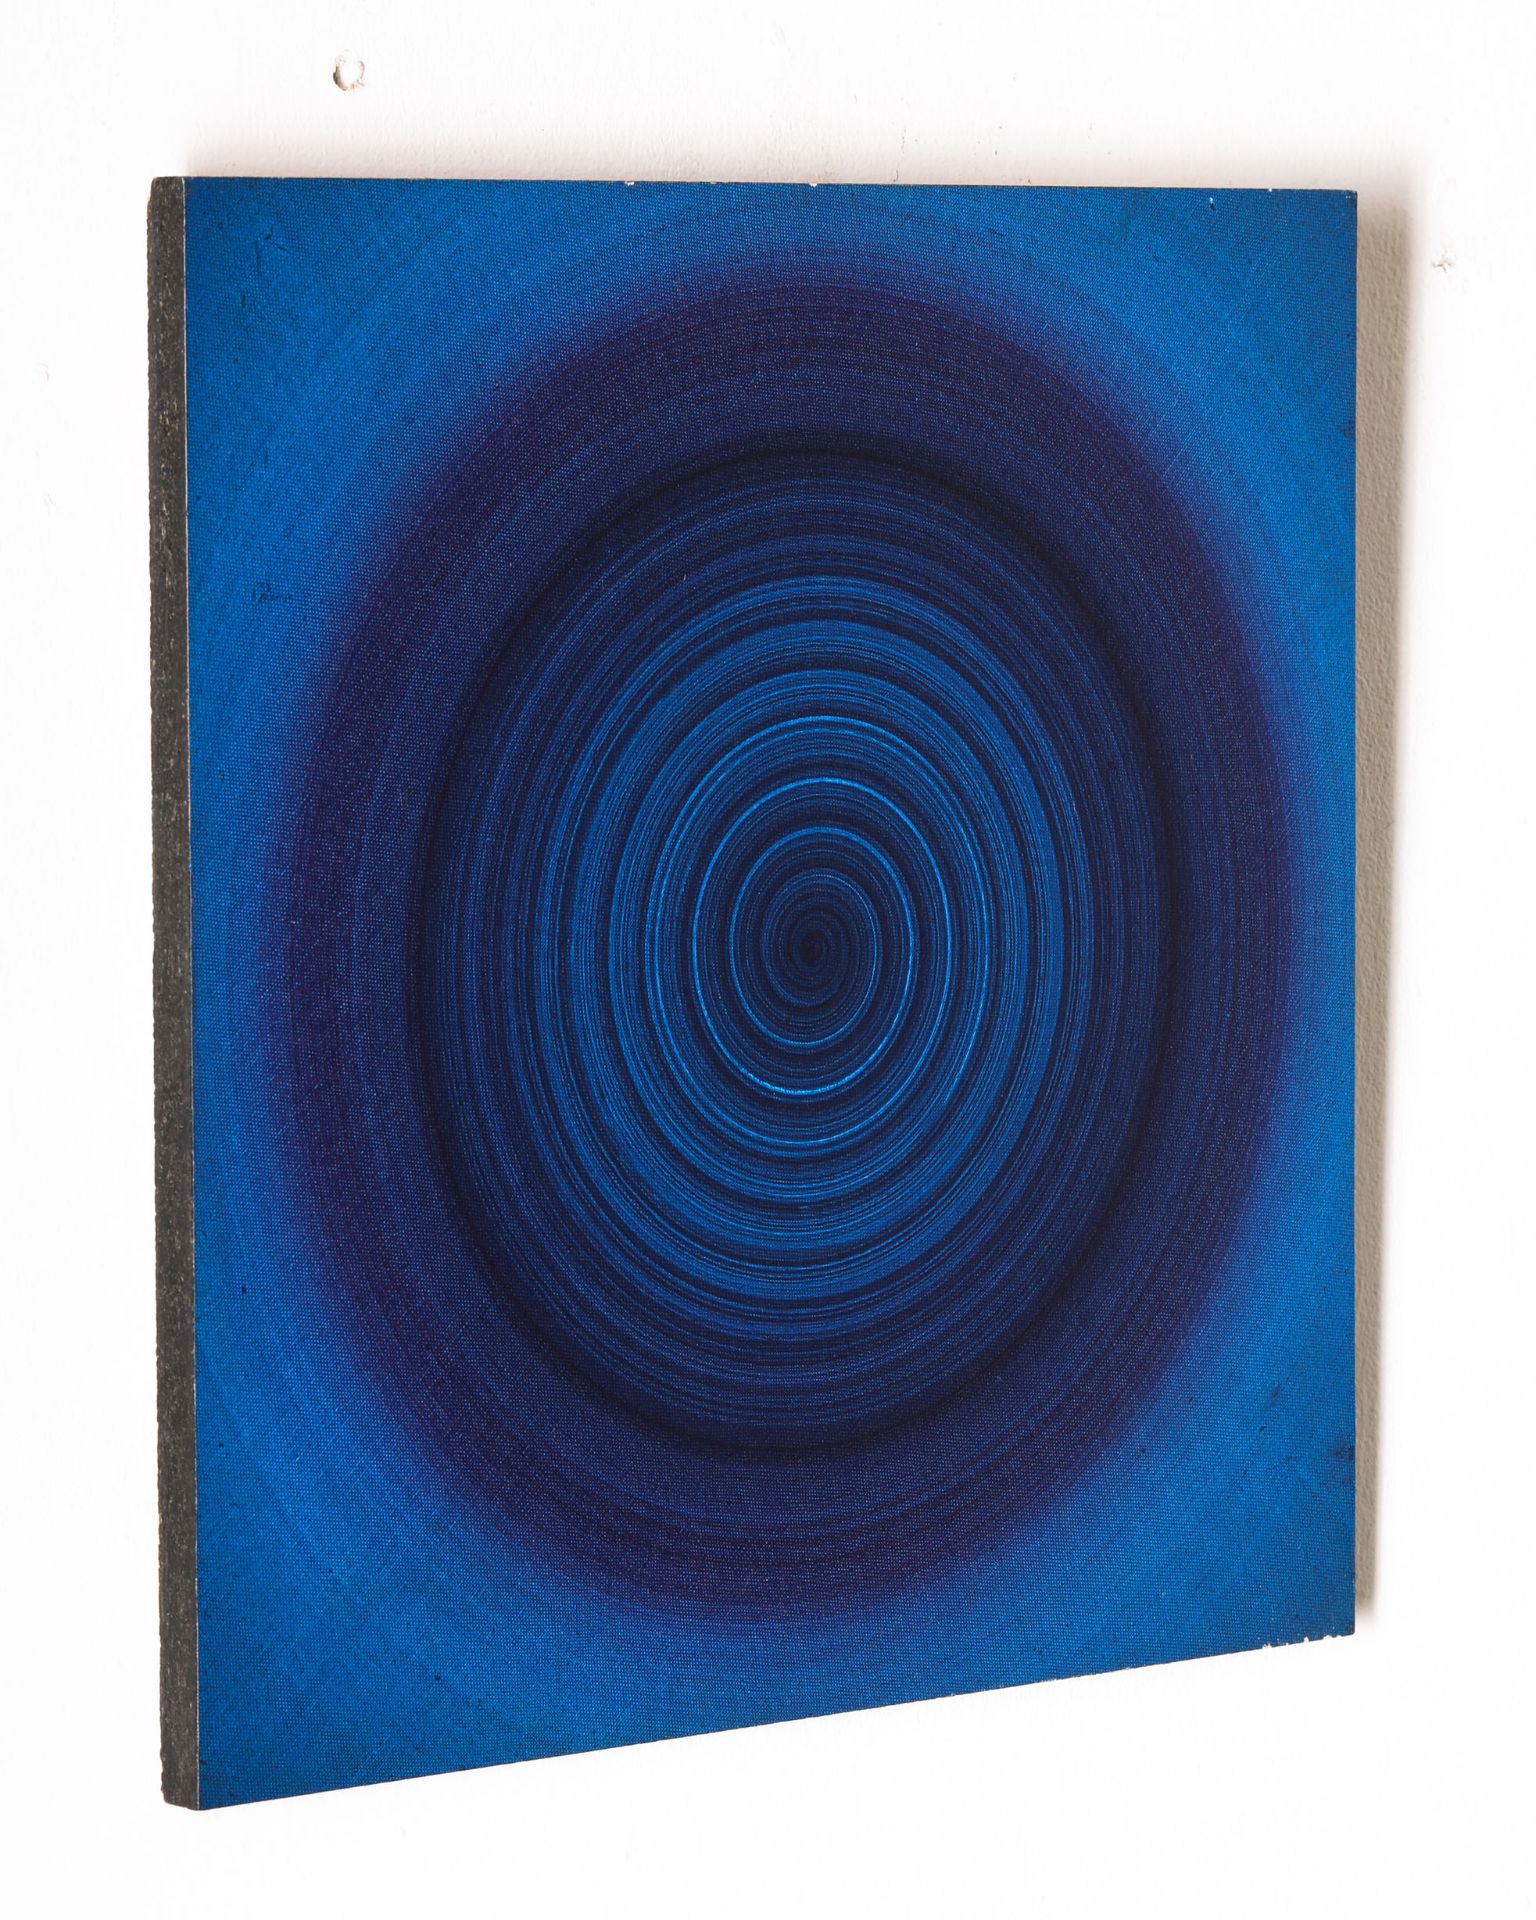 Robert Rotar*, Rotation blau No11, Oil, canvas on panel, 1968 - Image 3 of 4